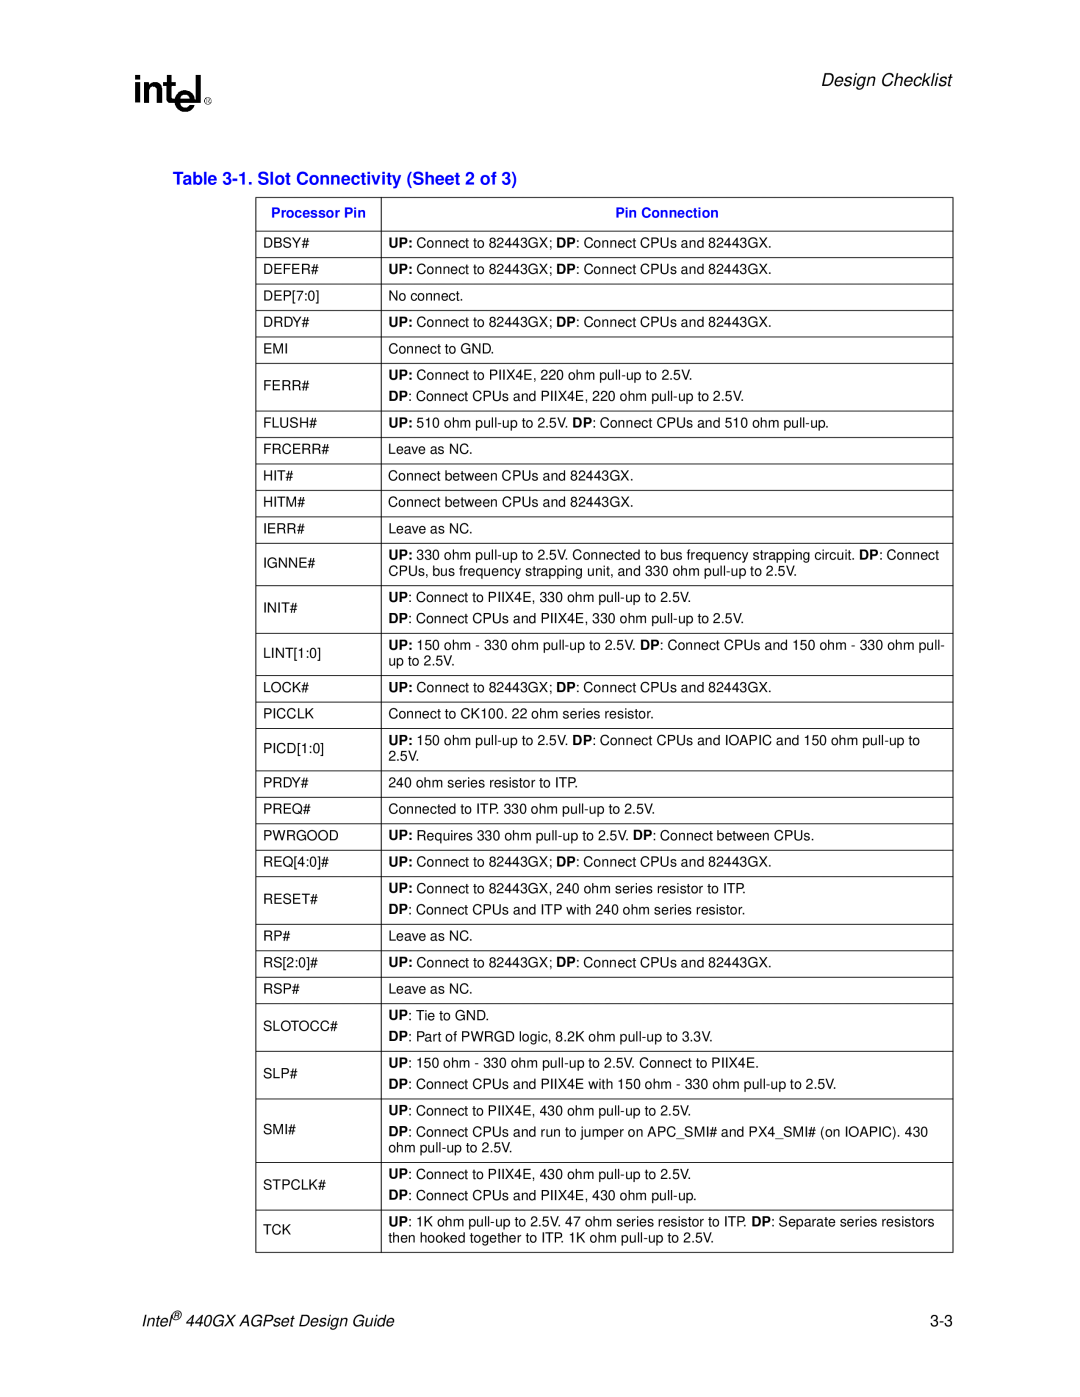 Intel manual 1. Slot Connectivity Sheet 2 of, Design Checklist, Intel440GX AGPset Design Guide 